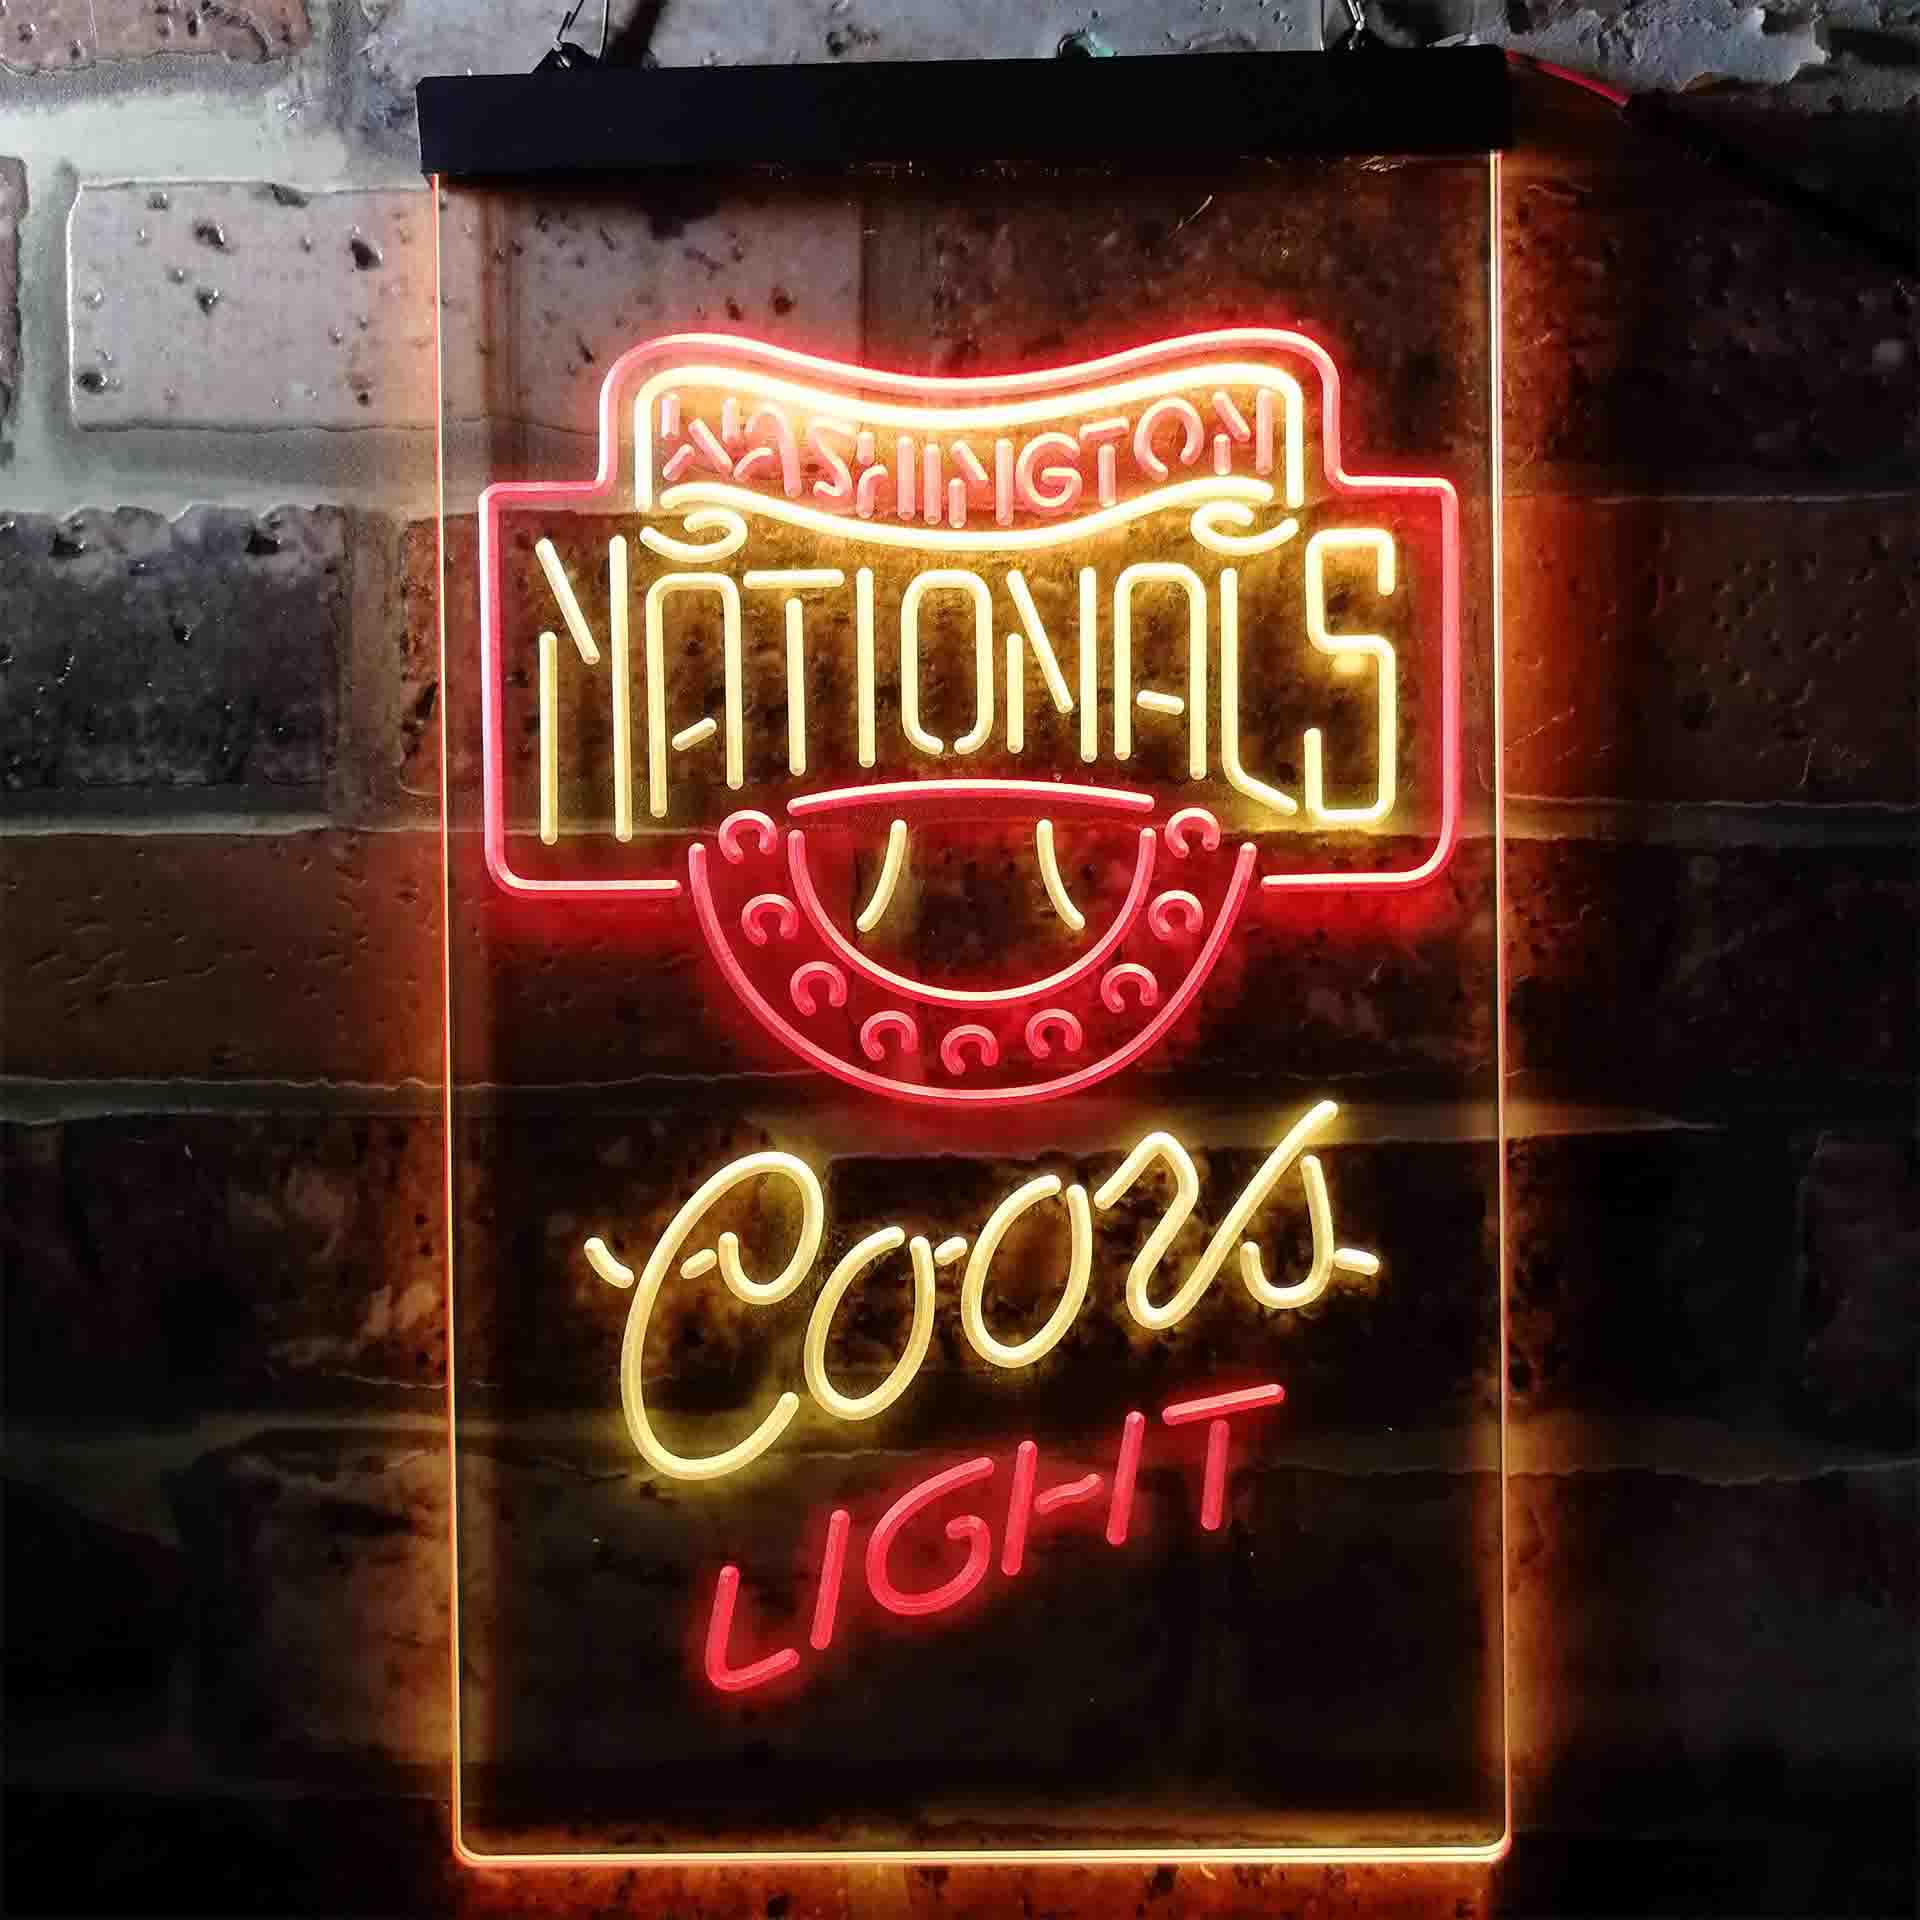 Washington Nationals Coors Light Neon-Like LED Sign